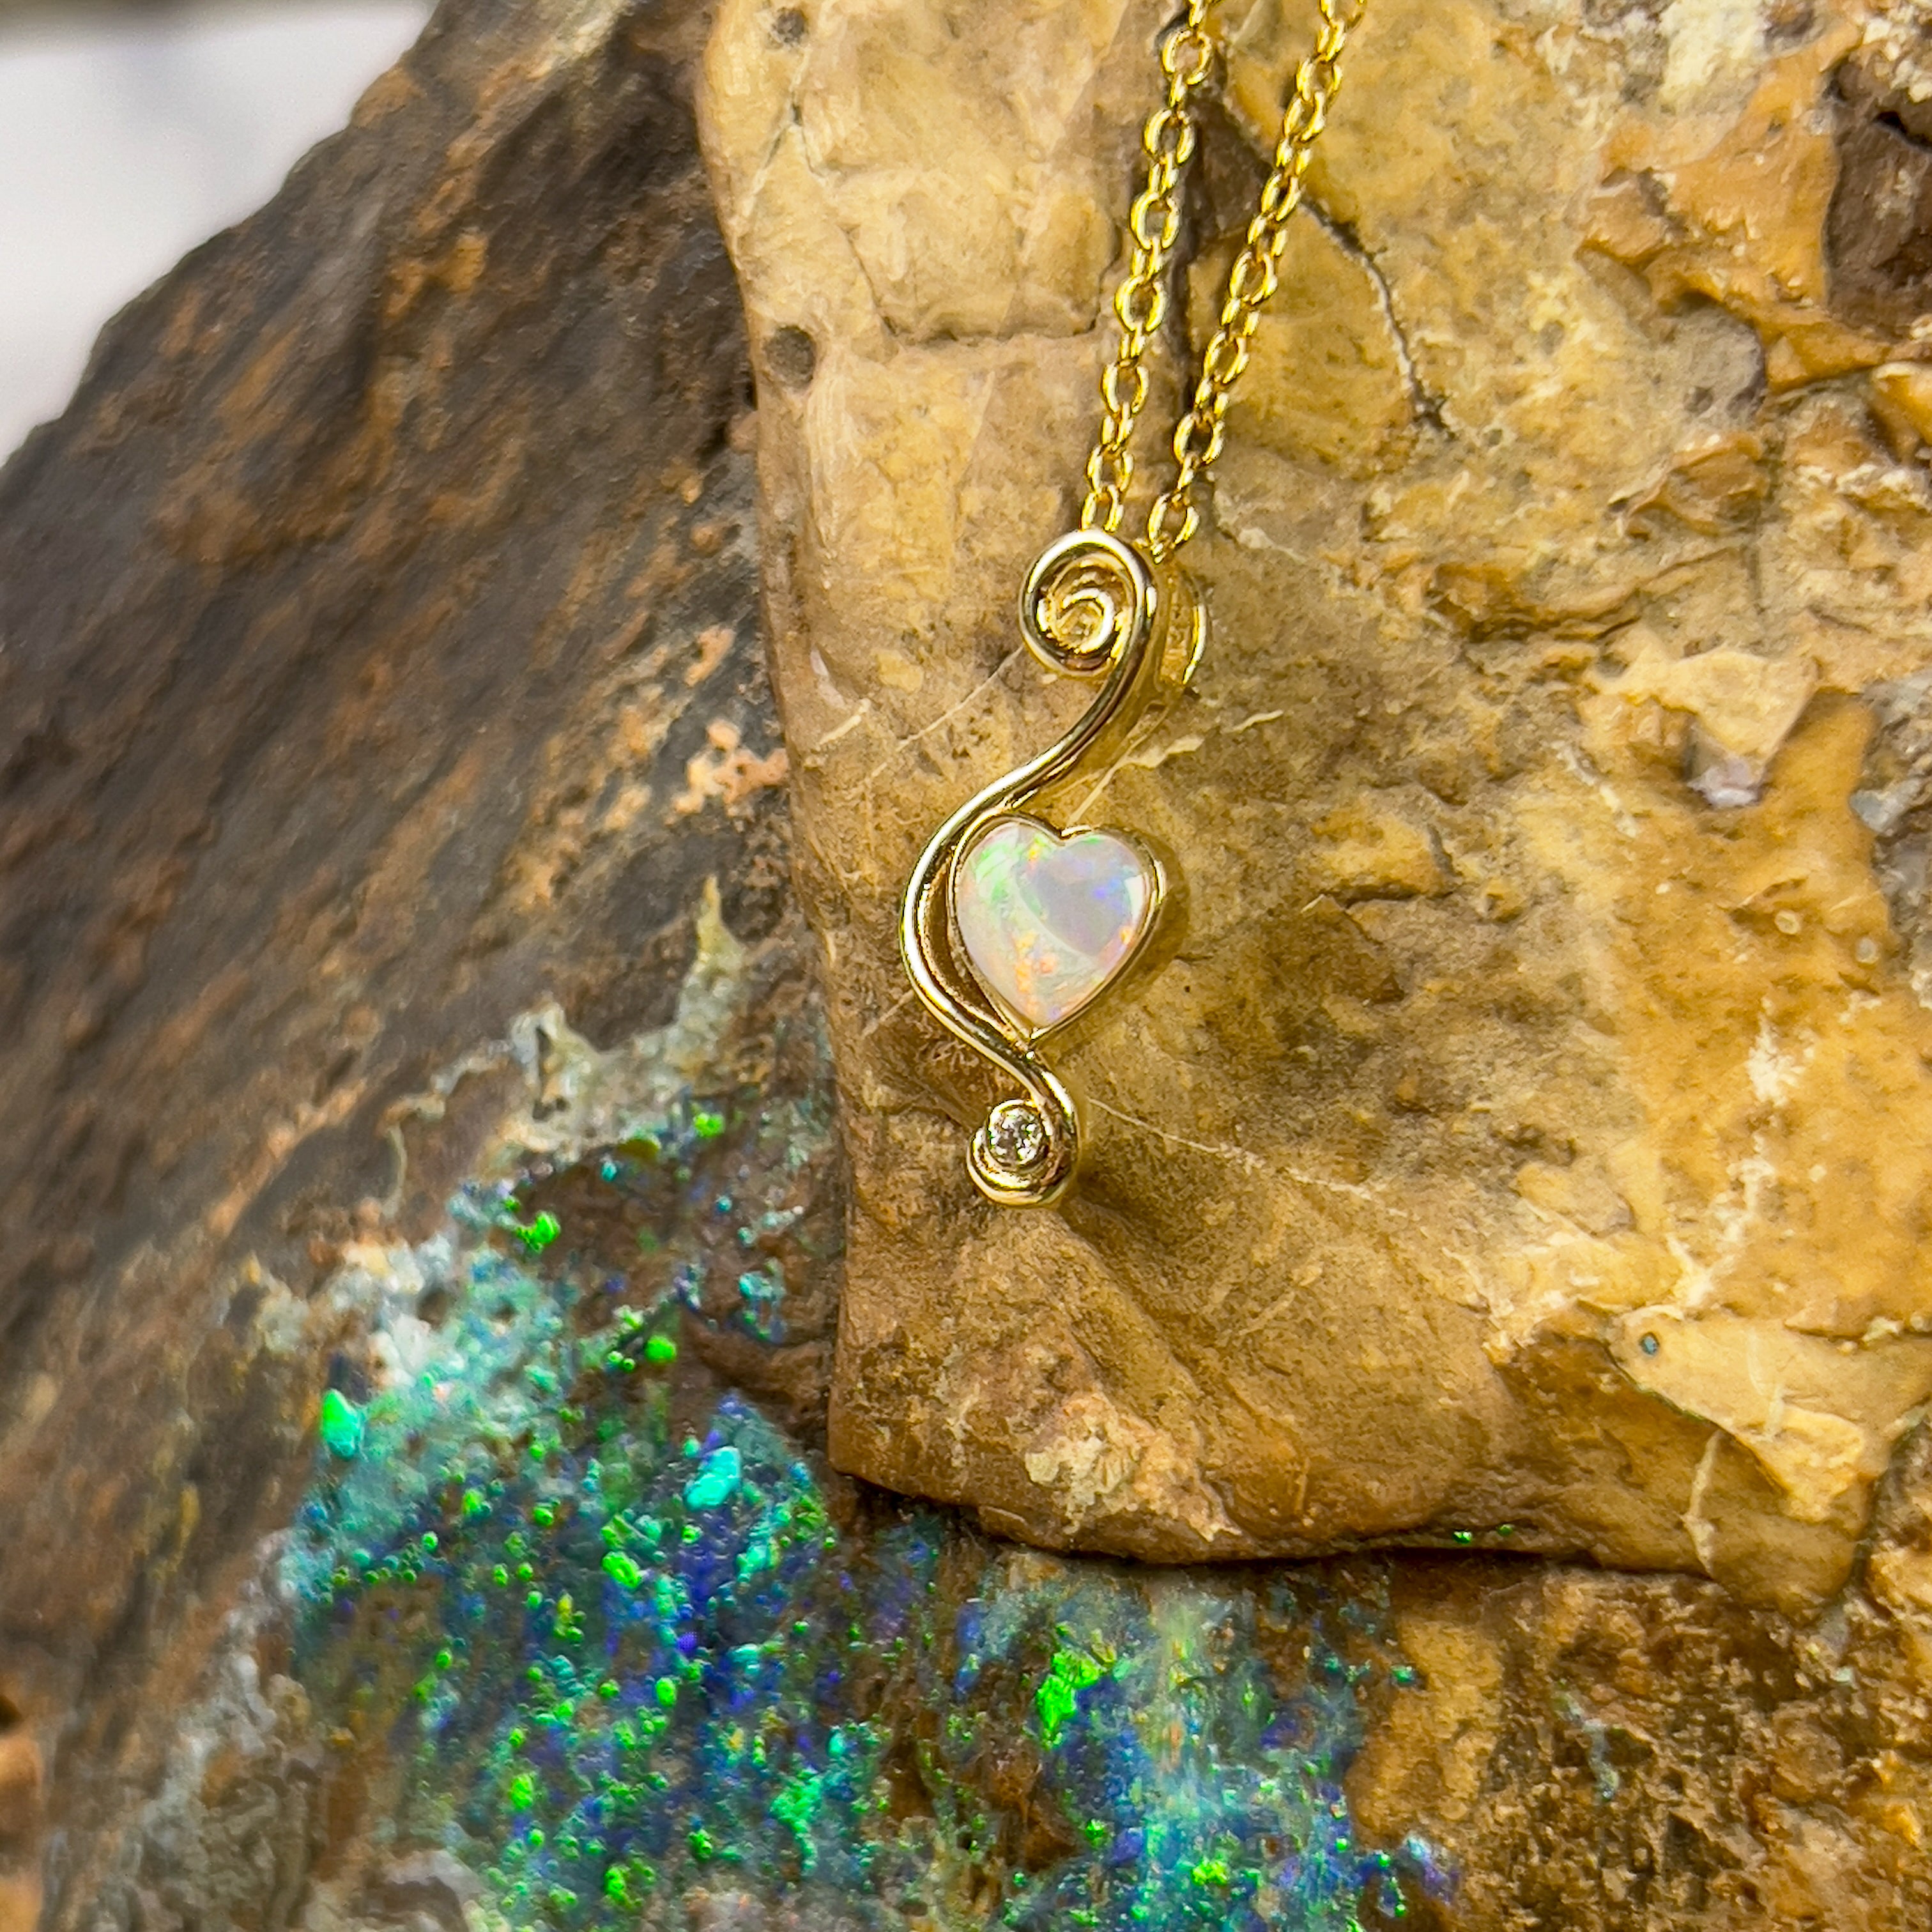 18kt Yellow gold pendant with 5mm Heart Opal and diamond - Masterpiece Jewellery Opal & Gems Sydney Australia | Online Shop